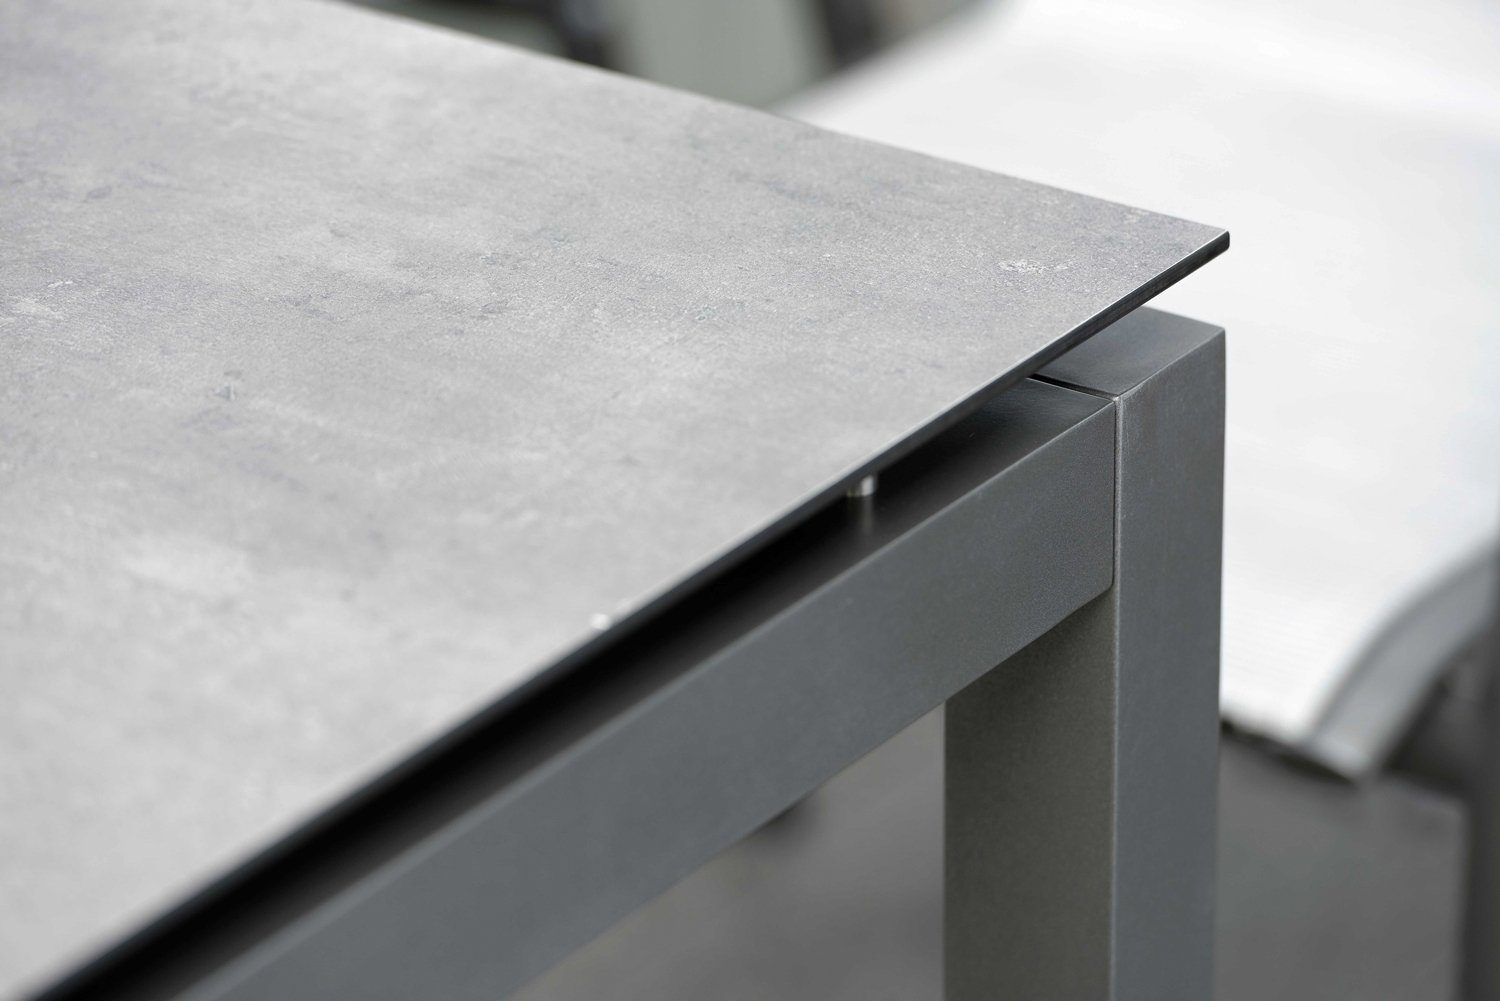 Stern Tischgestell CLASSIC, Aluminium, x B 90 160 Anthrazit cm, T